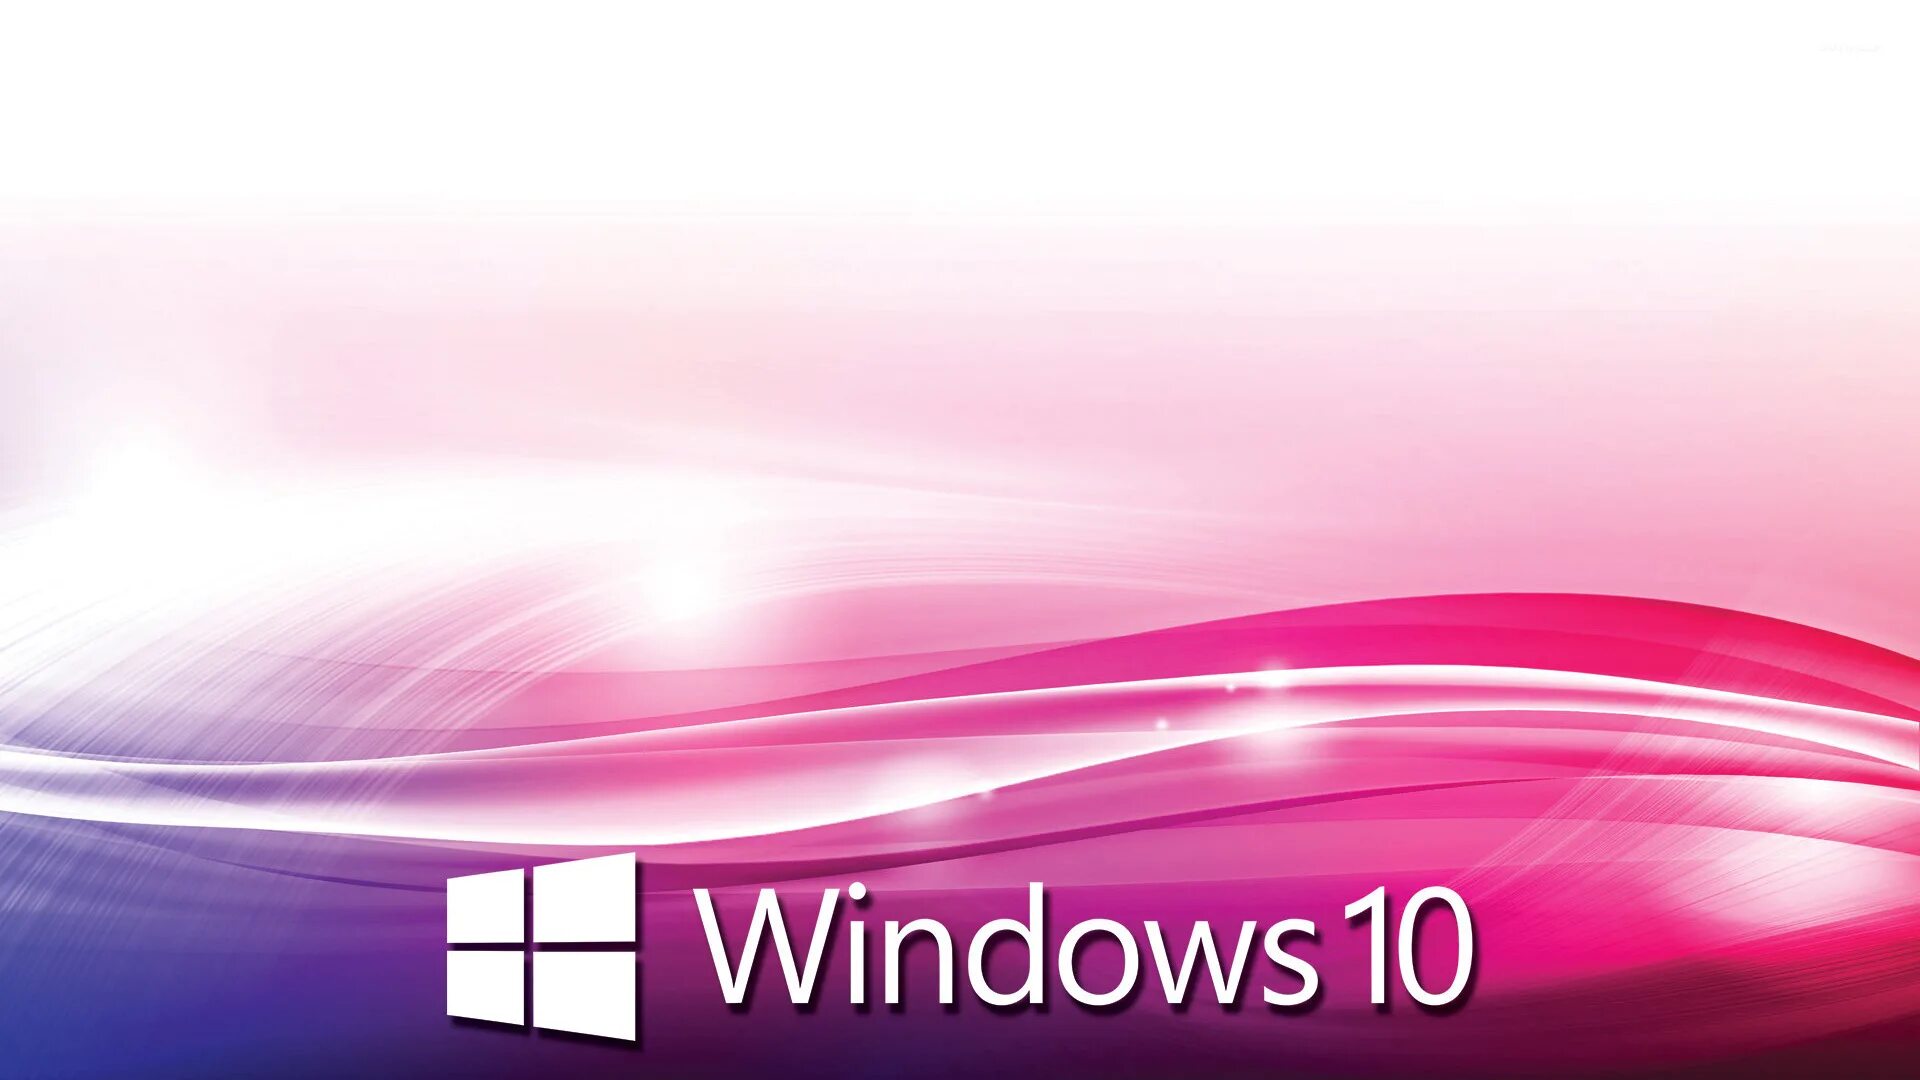 Картинки виндовс 10. Обои виндовс 10. Фон Windows 10. Картинки Windows 10. Классические обои Windows 10.